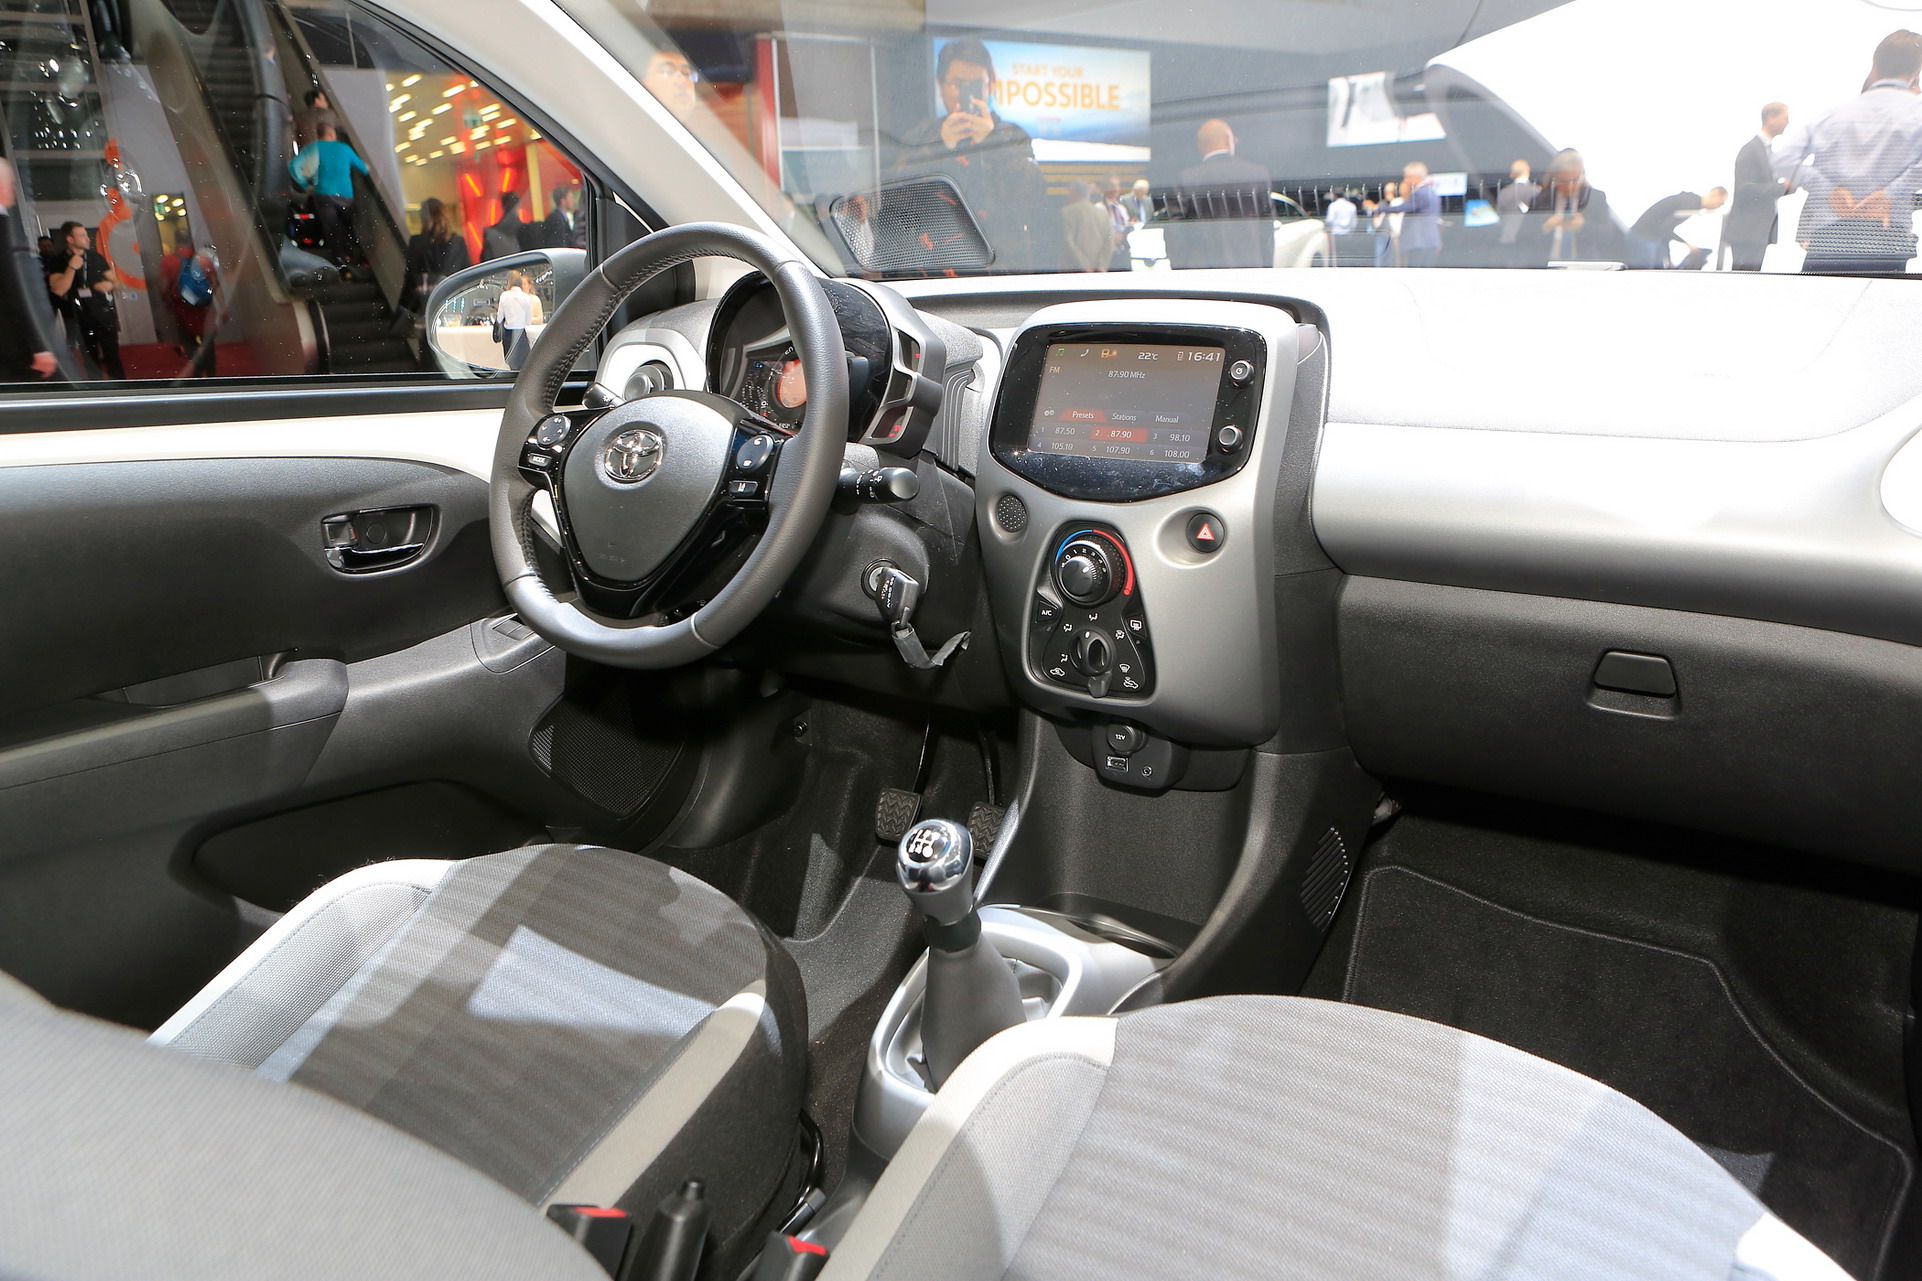 Toyota Aygo Facelift Unveiled Ahead of Geneva Motor Show - News18